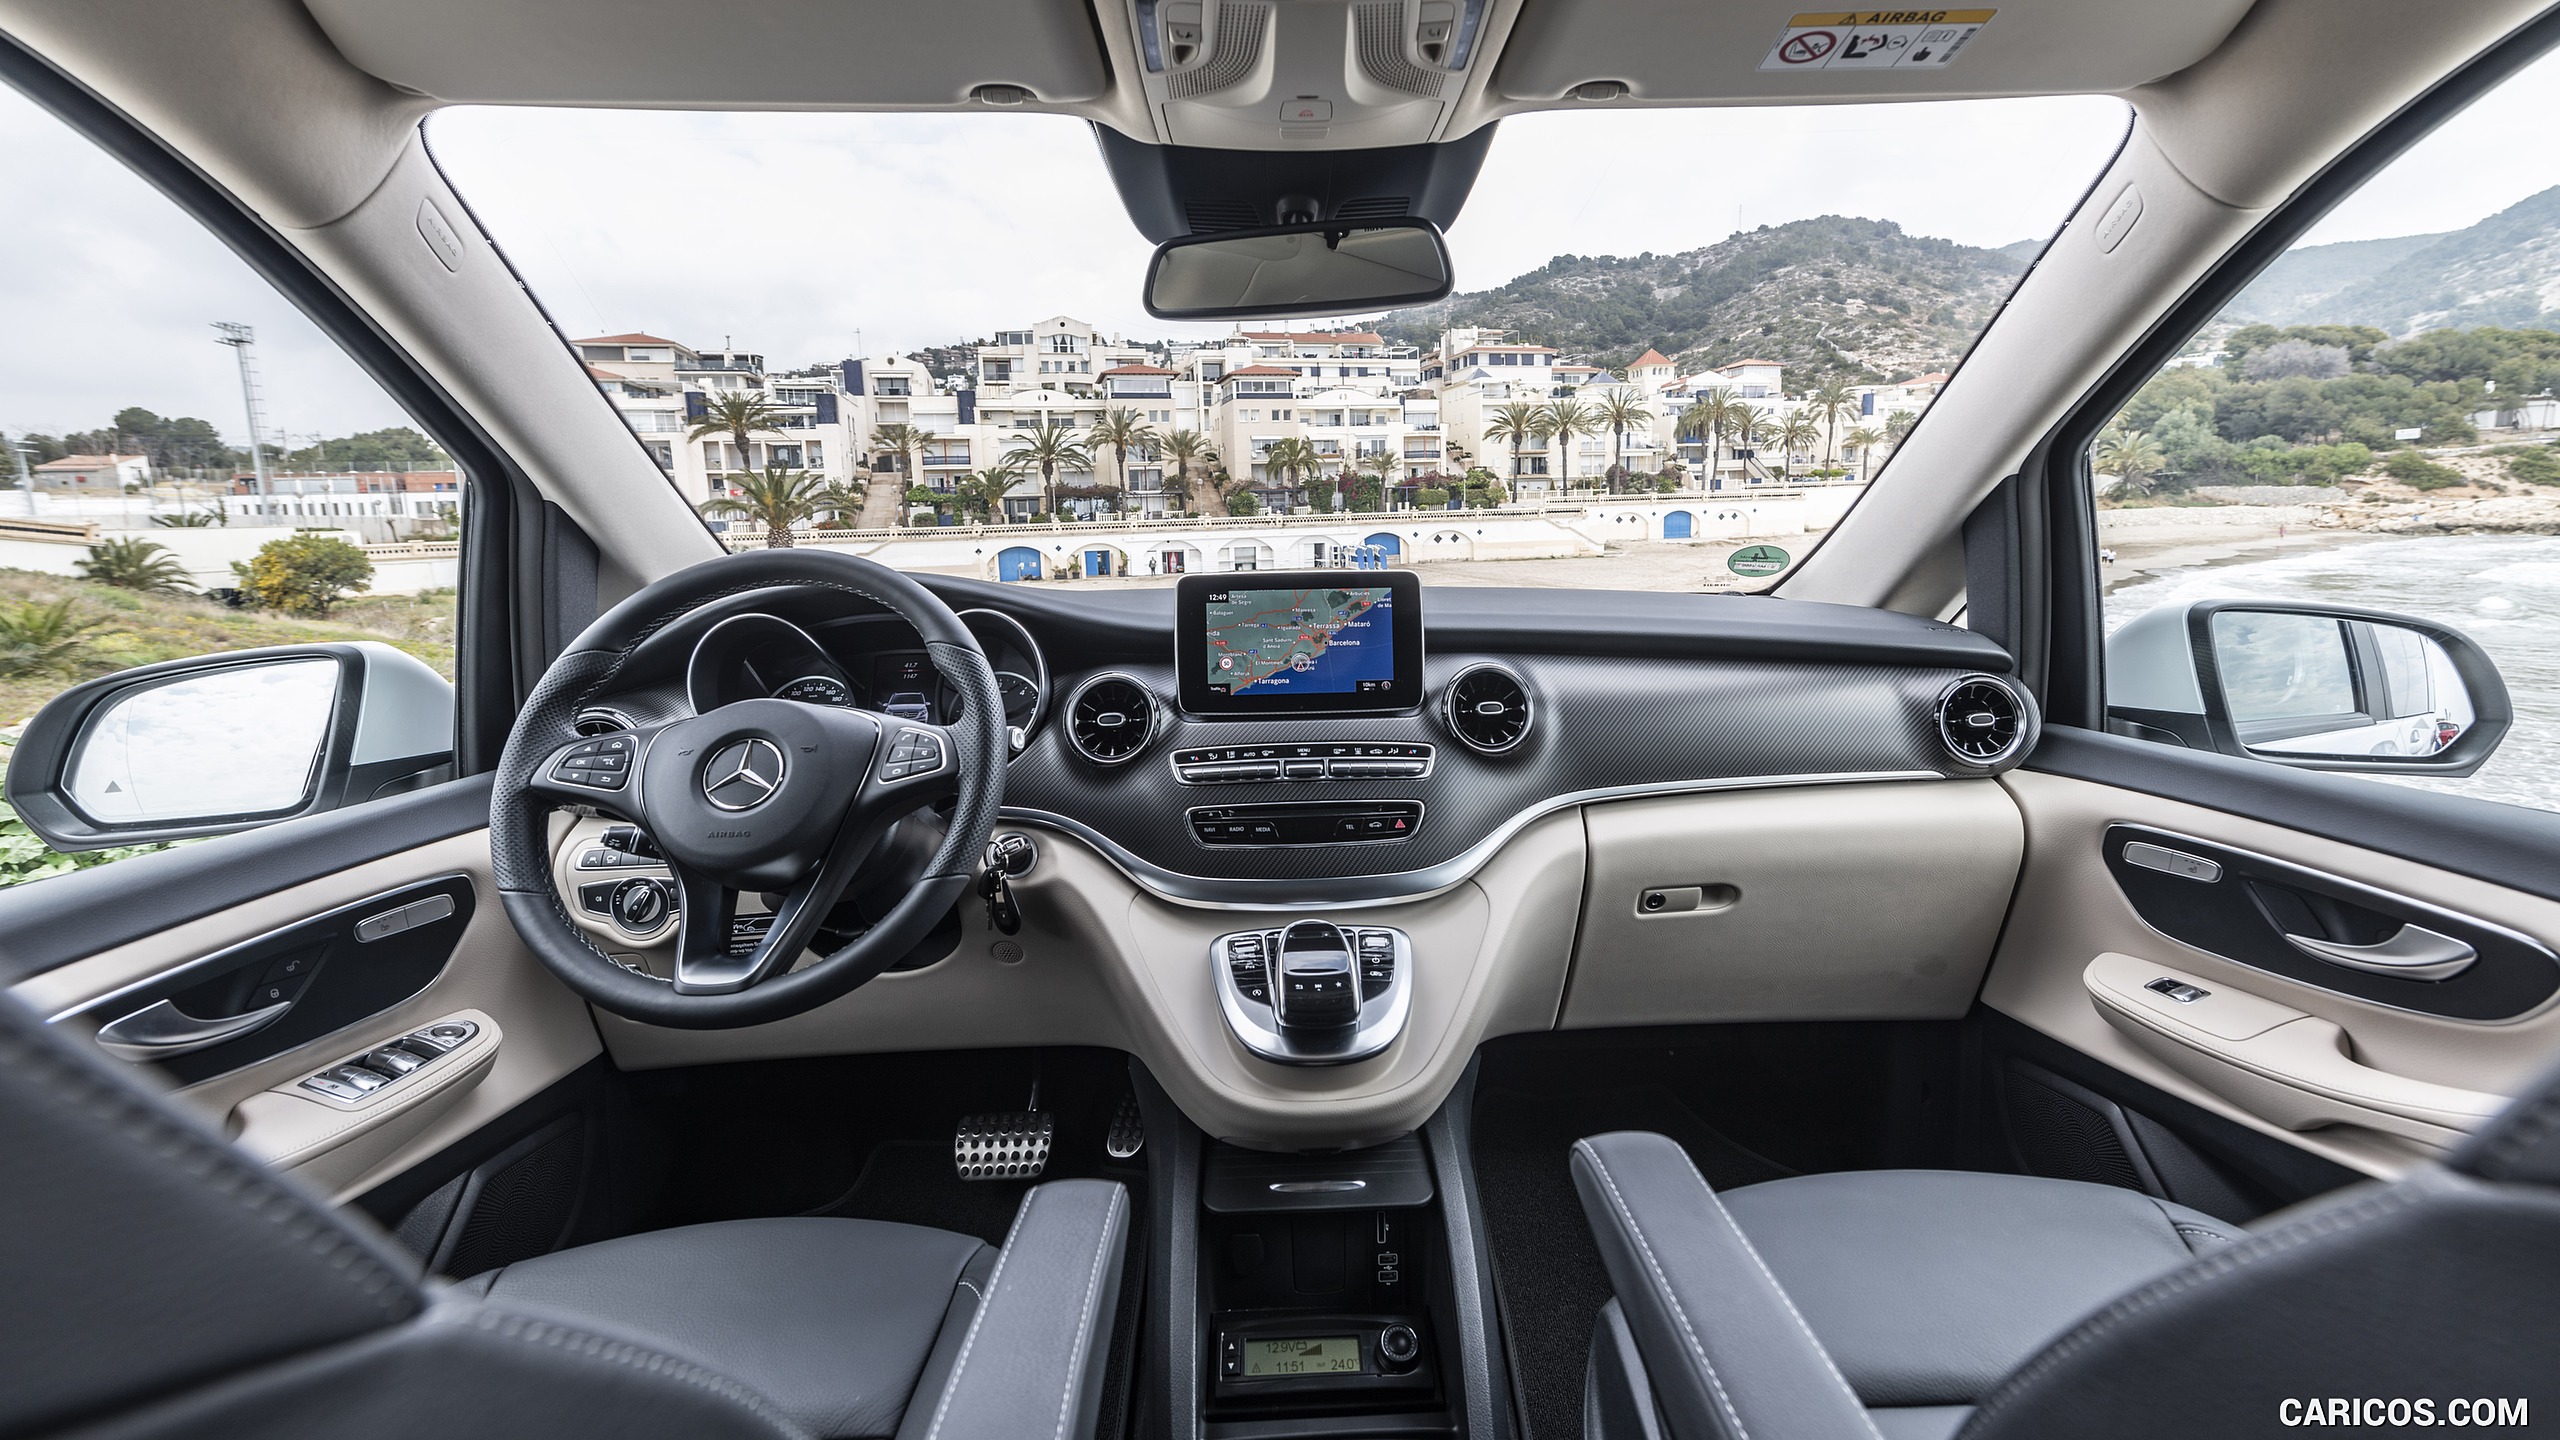 2019 Mercedes-Benz V-Class Marco Polo 300d - Interior, Cockpit, #210 of 216